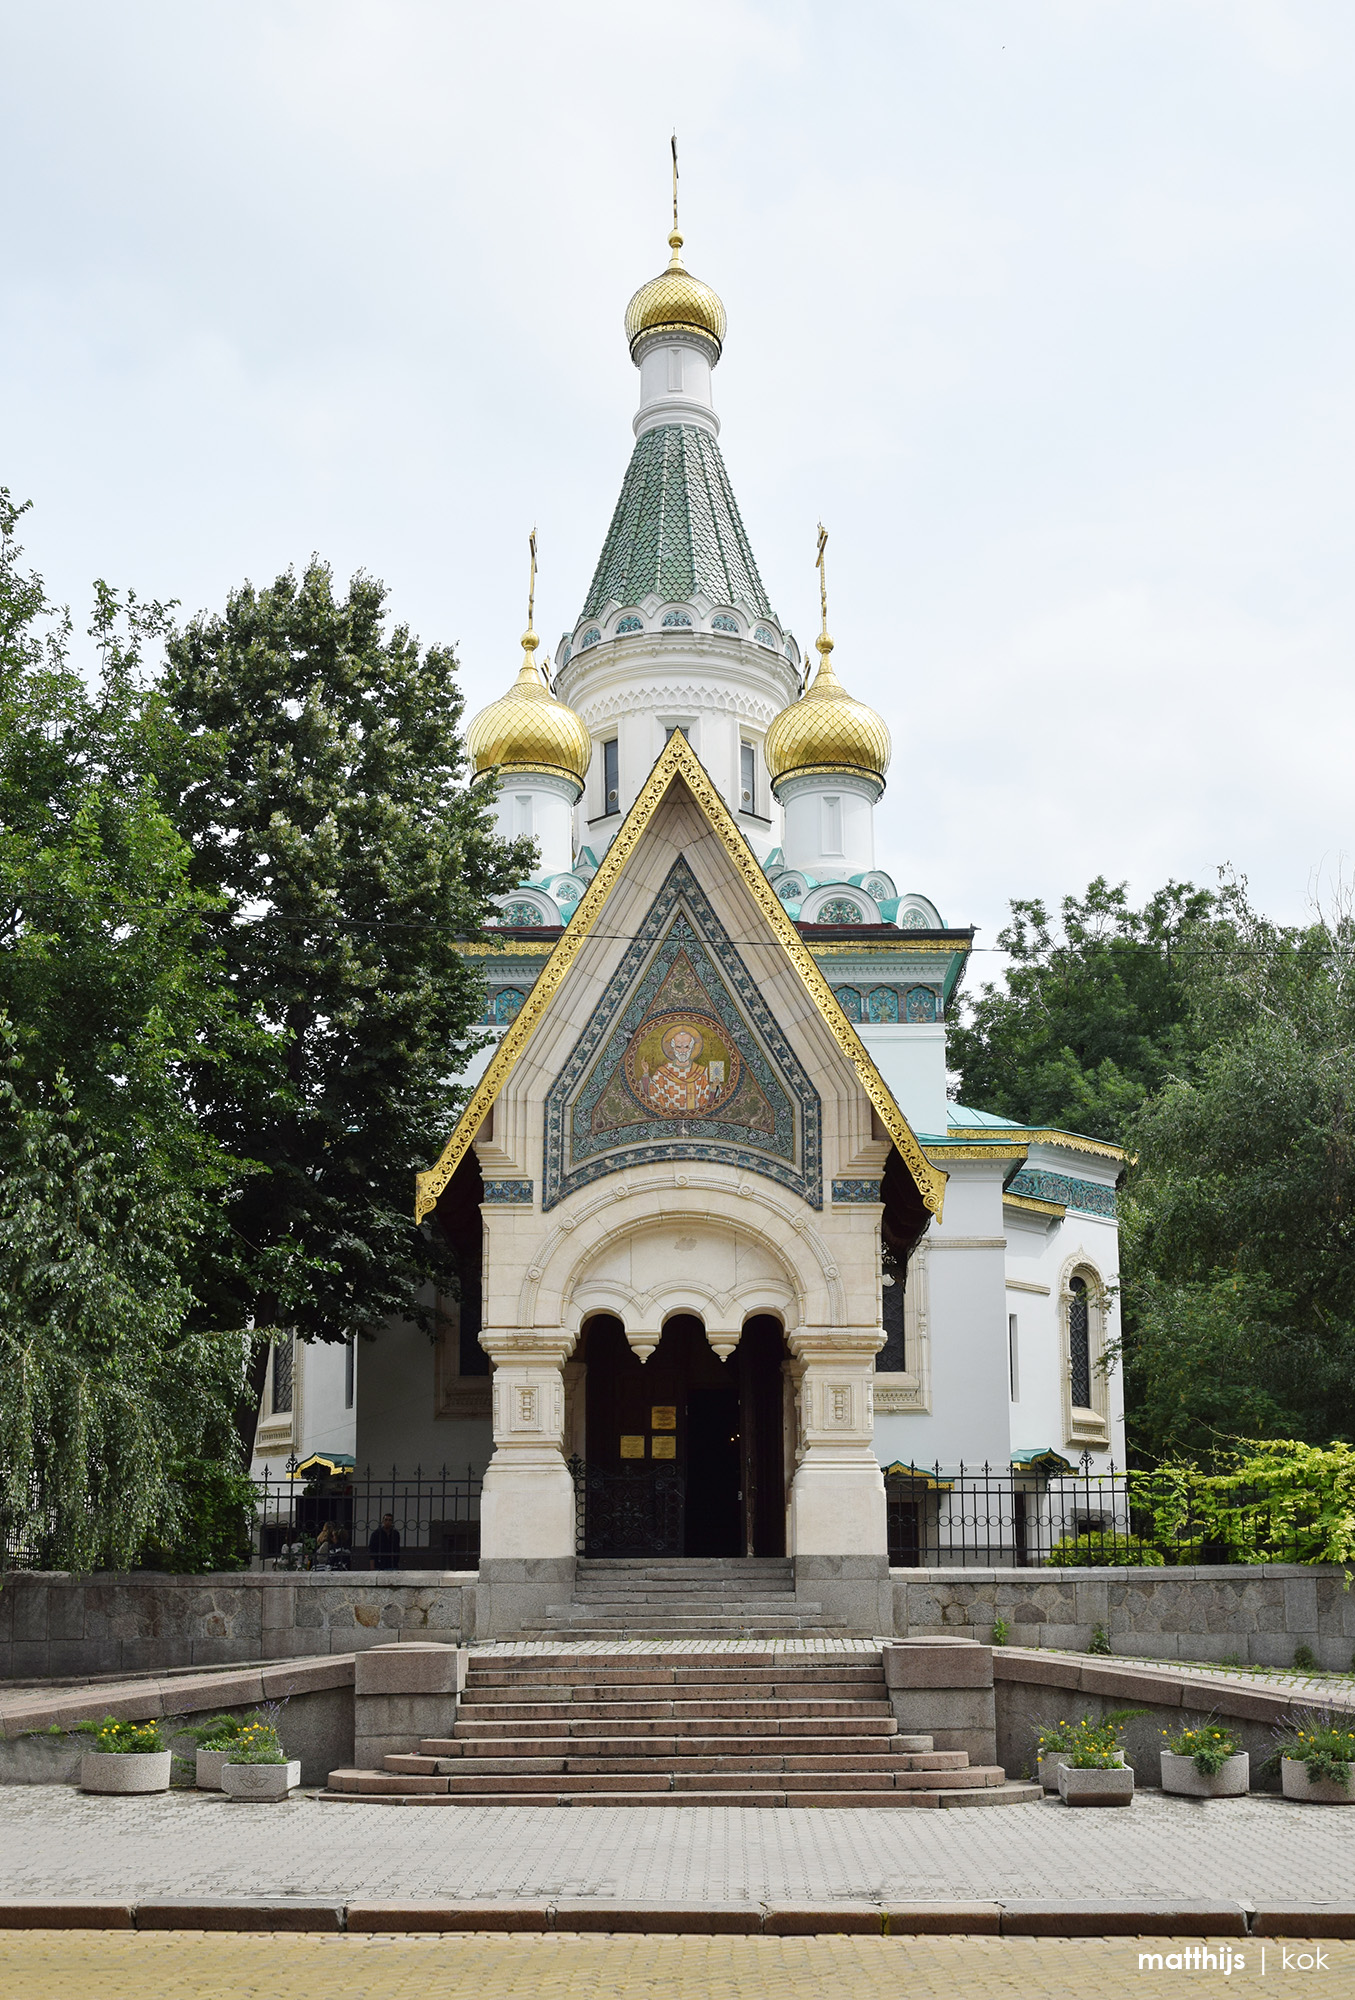 The Russian Church, Sofia, Bulgaria | Photo by Matthijs Kok